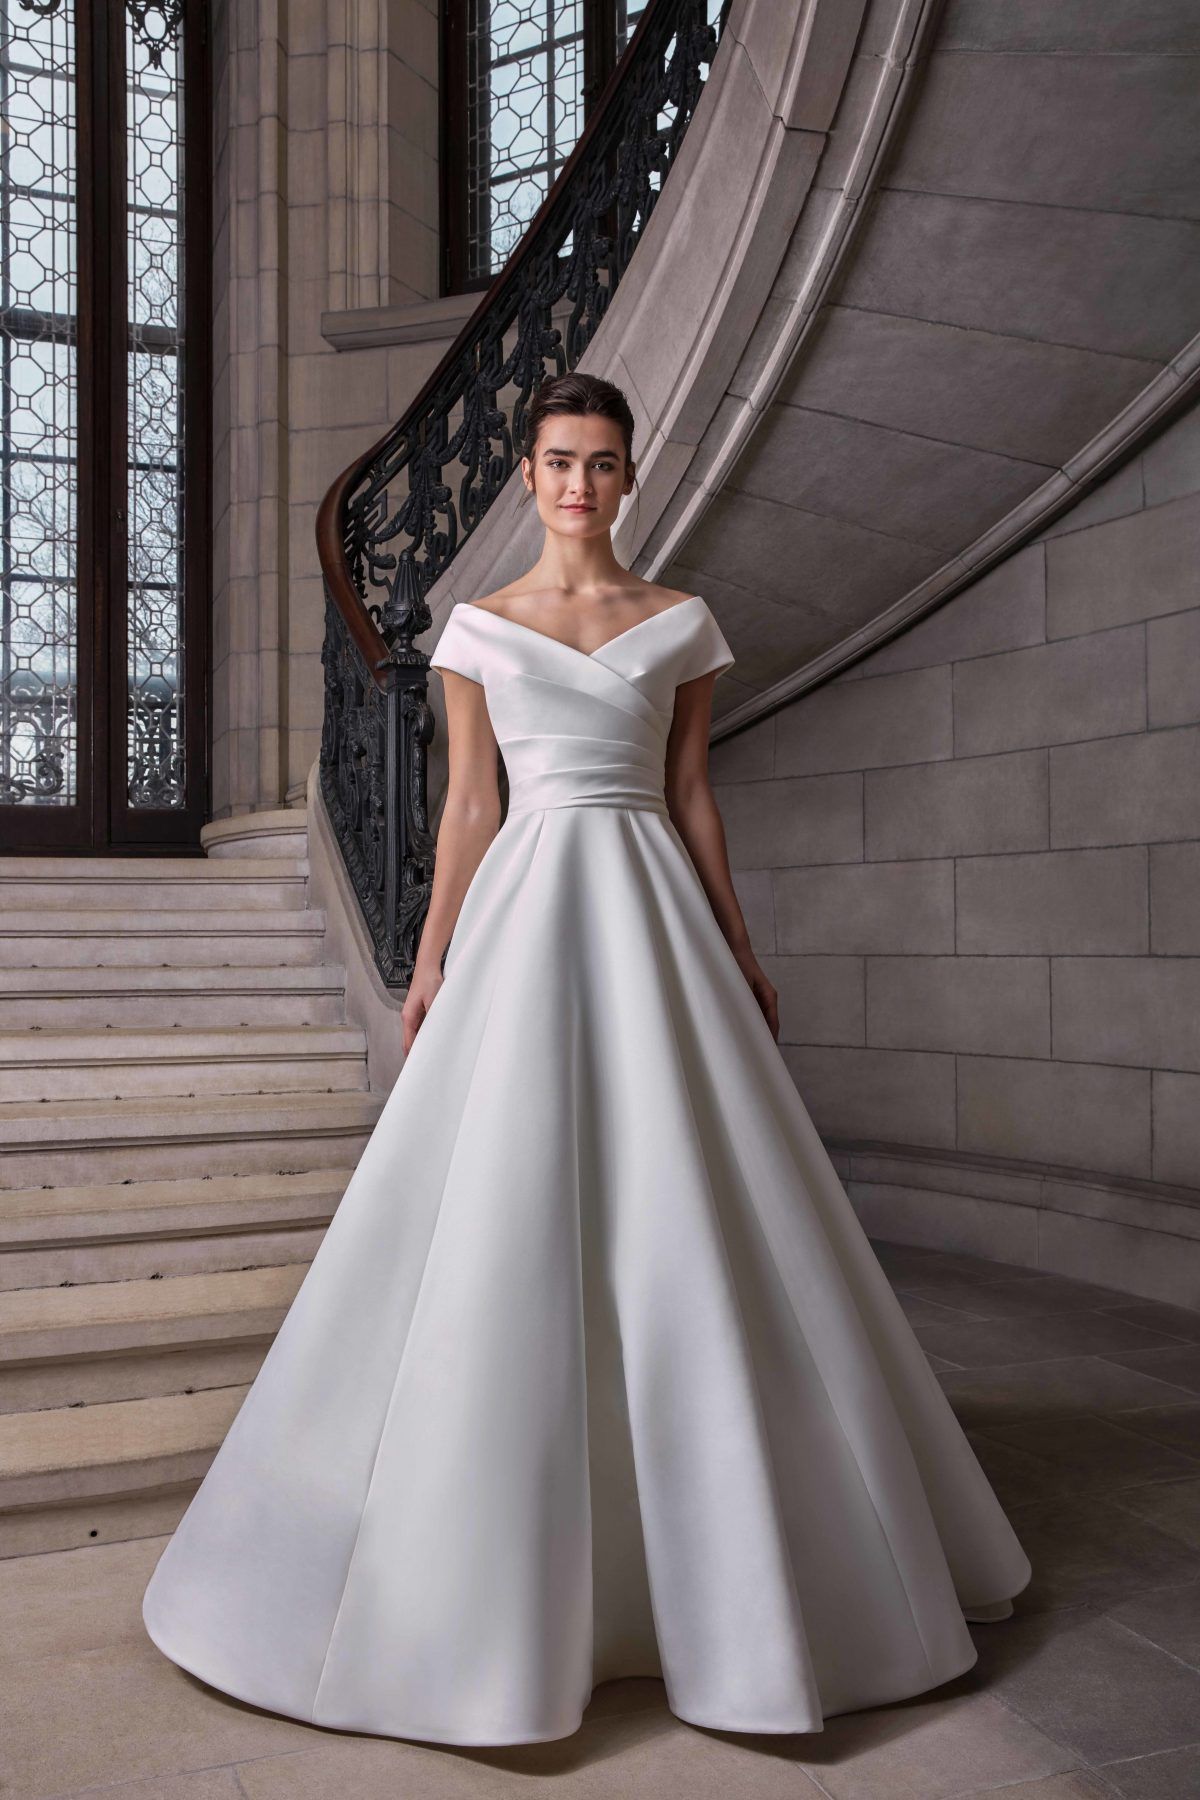 sareh-nouri-simple-silk-ball-gown-wedding-dress-34118836-1200x1800.jpg